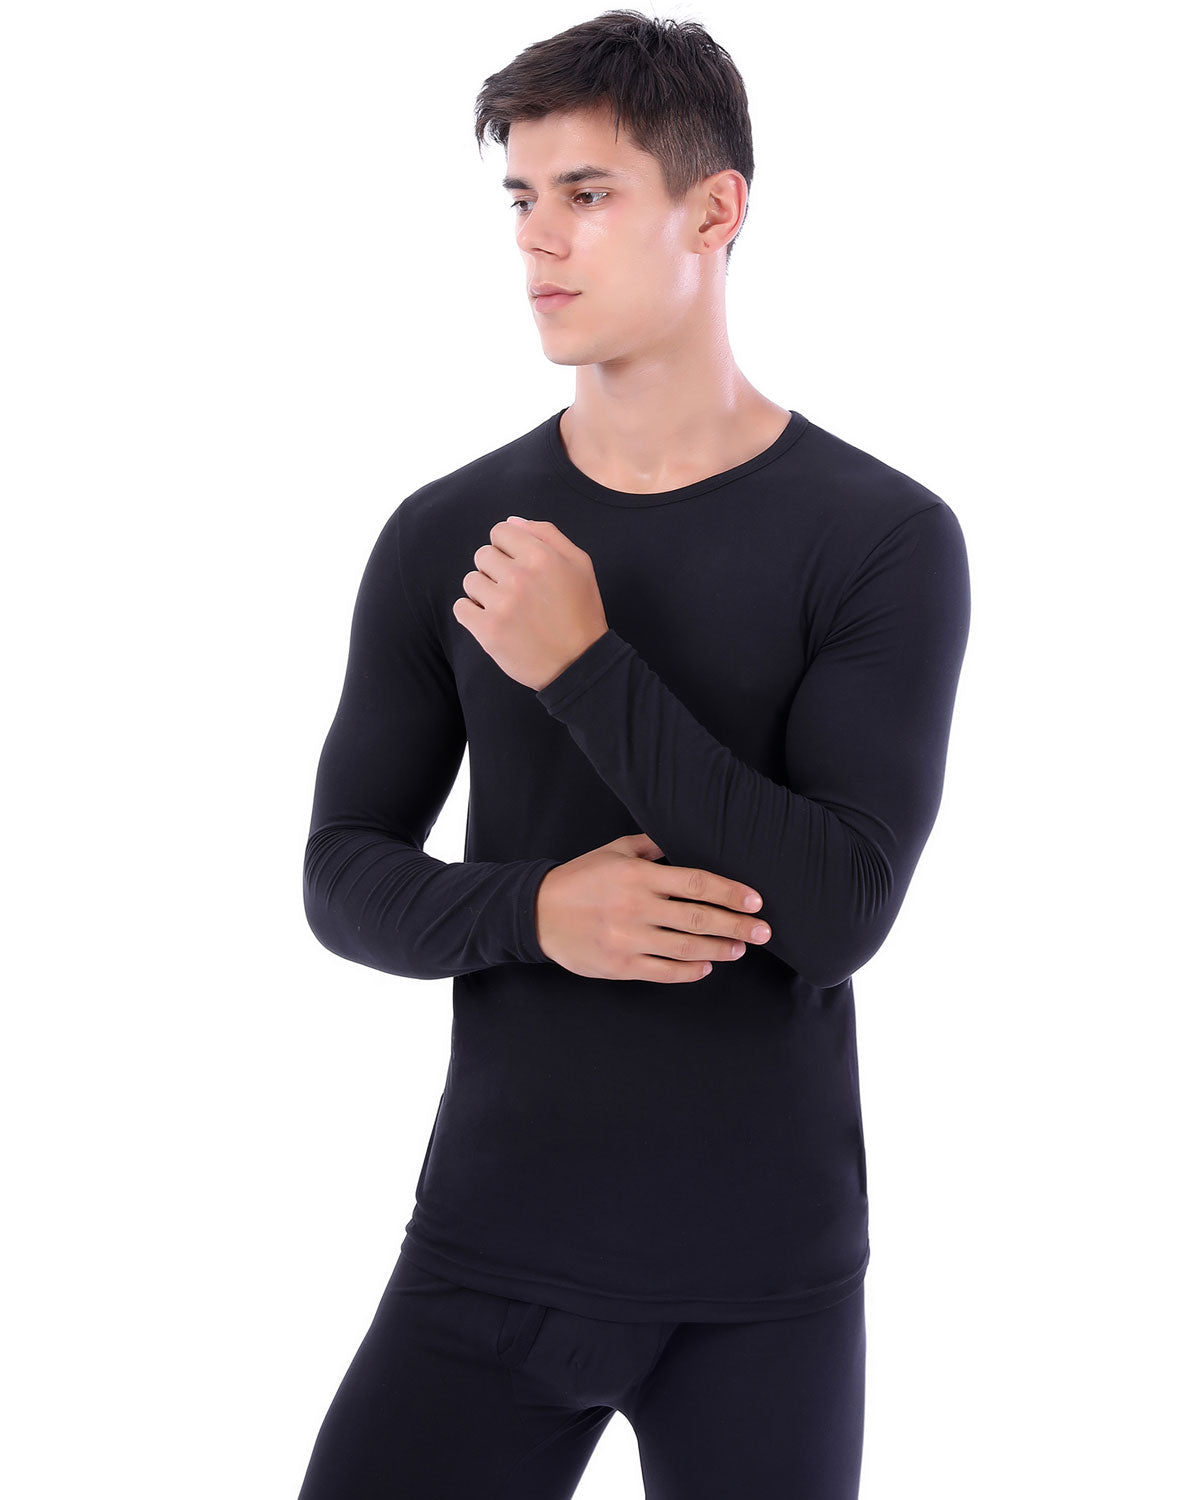 LANBAOSI 2 Pack Thermal Shirts for Men Crewneck Long Sleeve